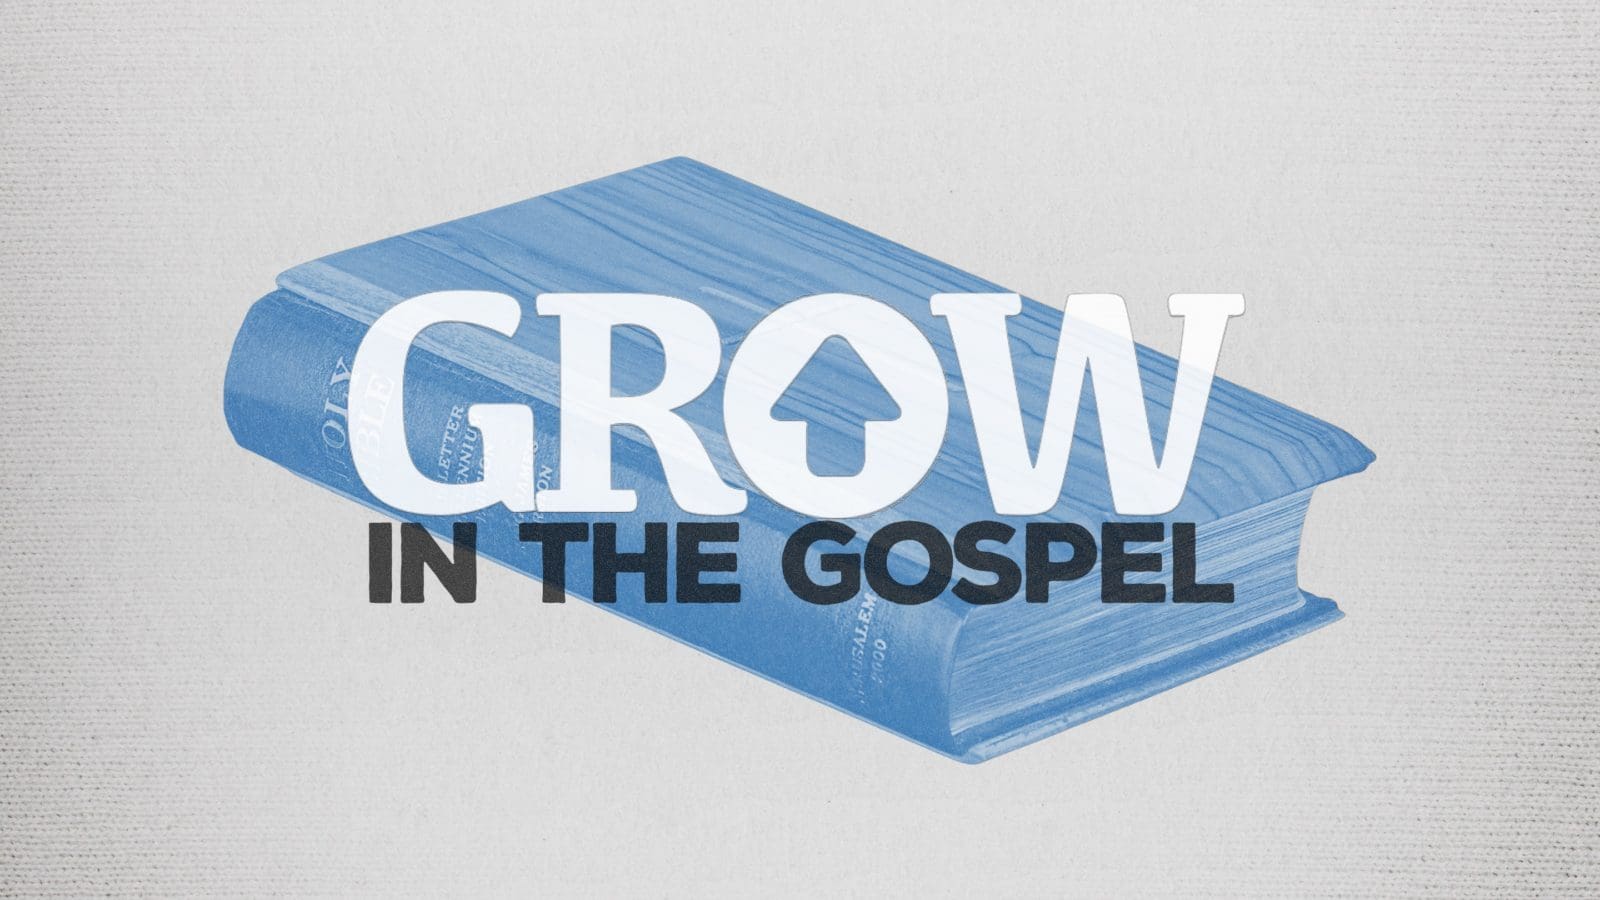 3 Circles: 1 Method of Sharing the Gospel